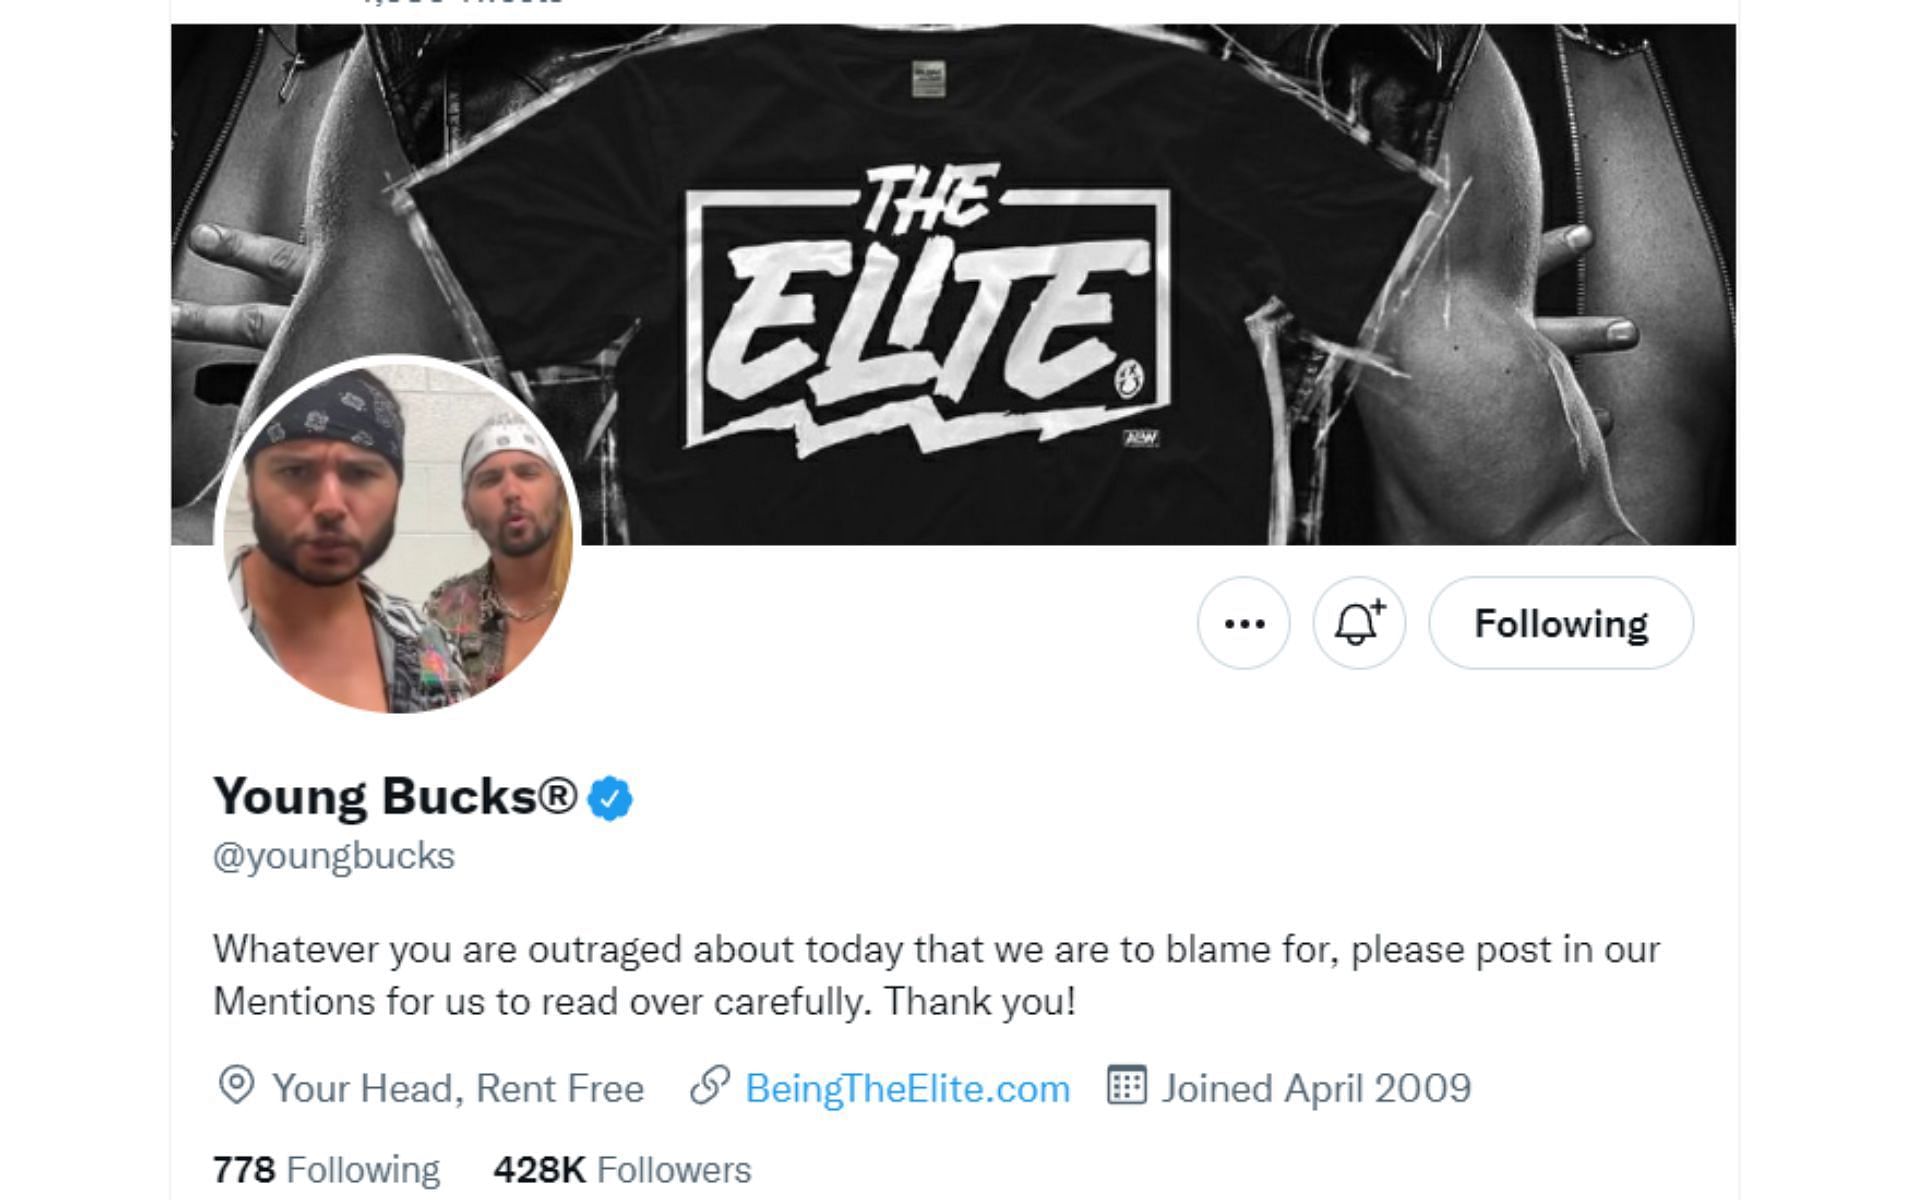 The Young Bucks&#039; latest Twitter bio